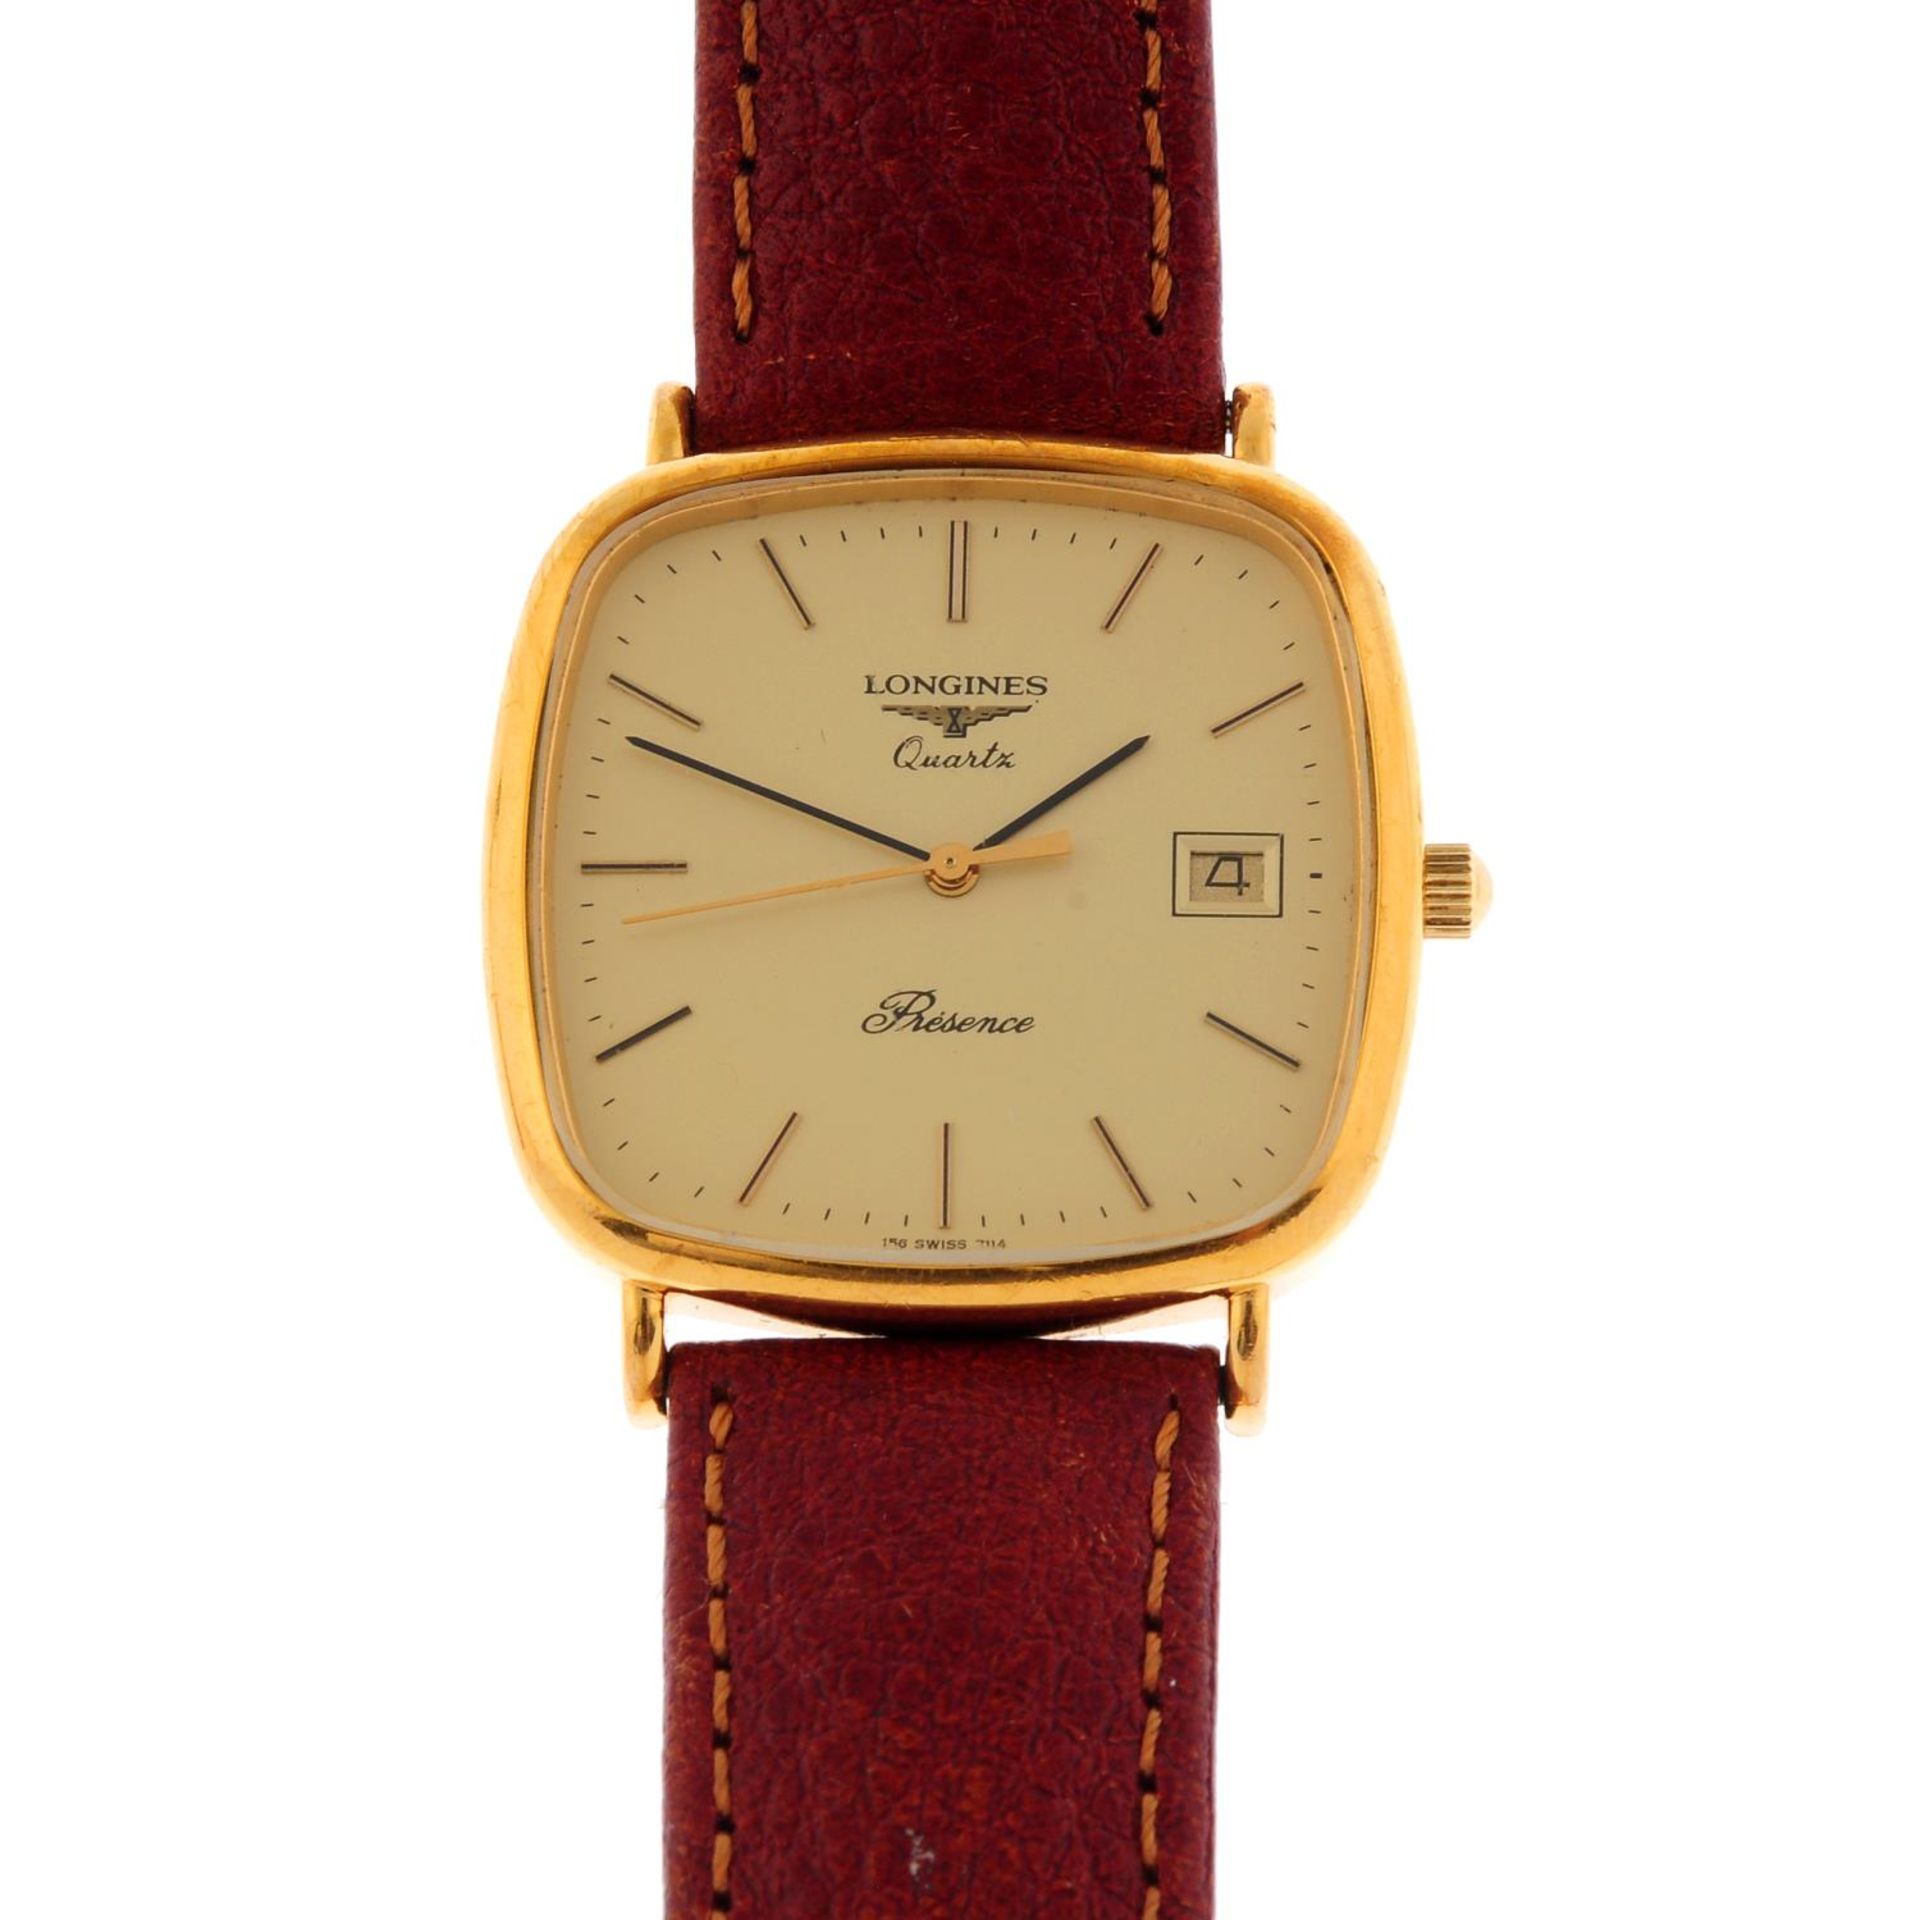 LONGINES - a gentleman's La Grande Classique wrist watch. - Image 5 of 6